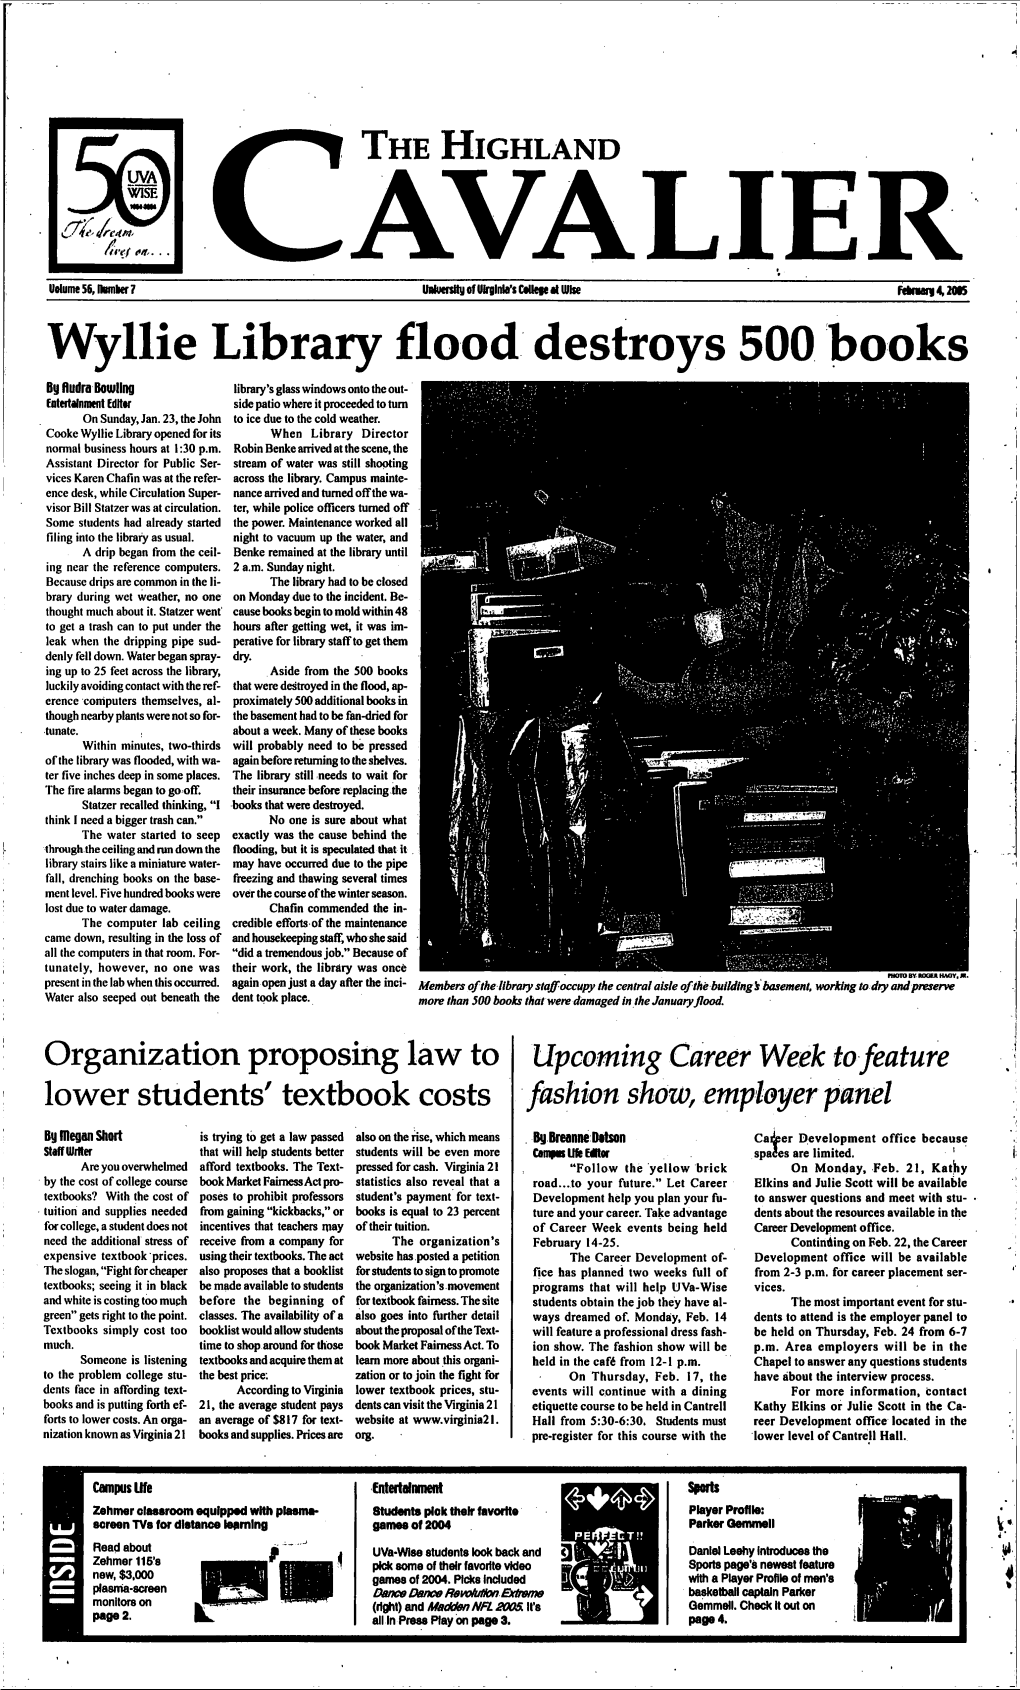 Wyllie Library Flood Destroys 500 Books